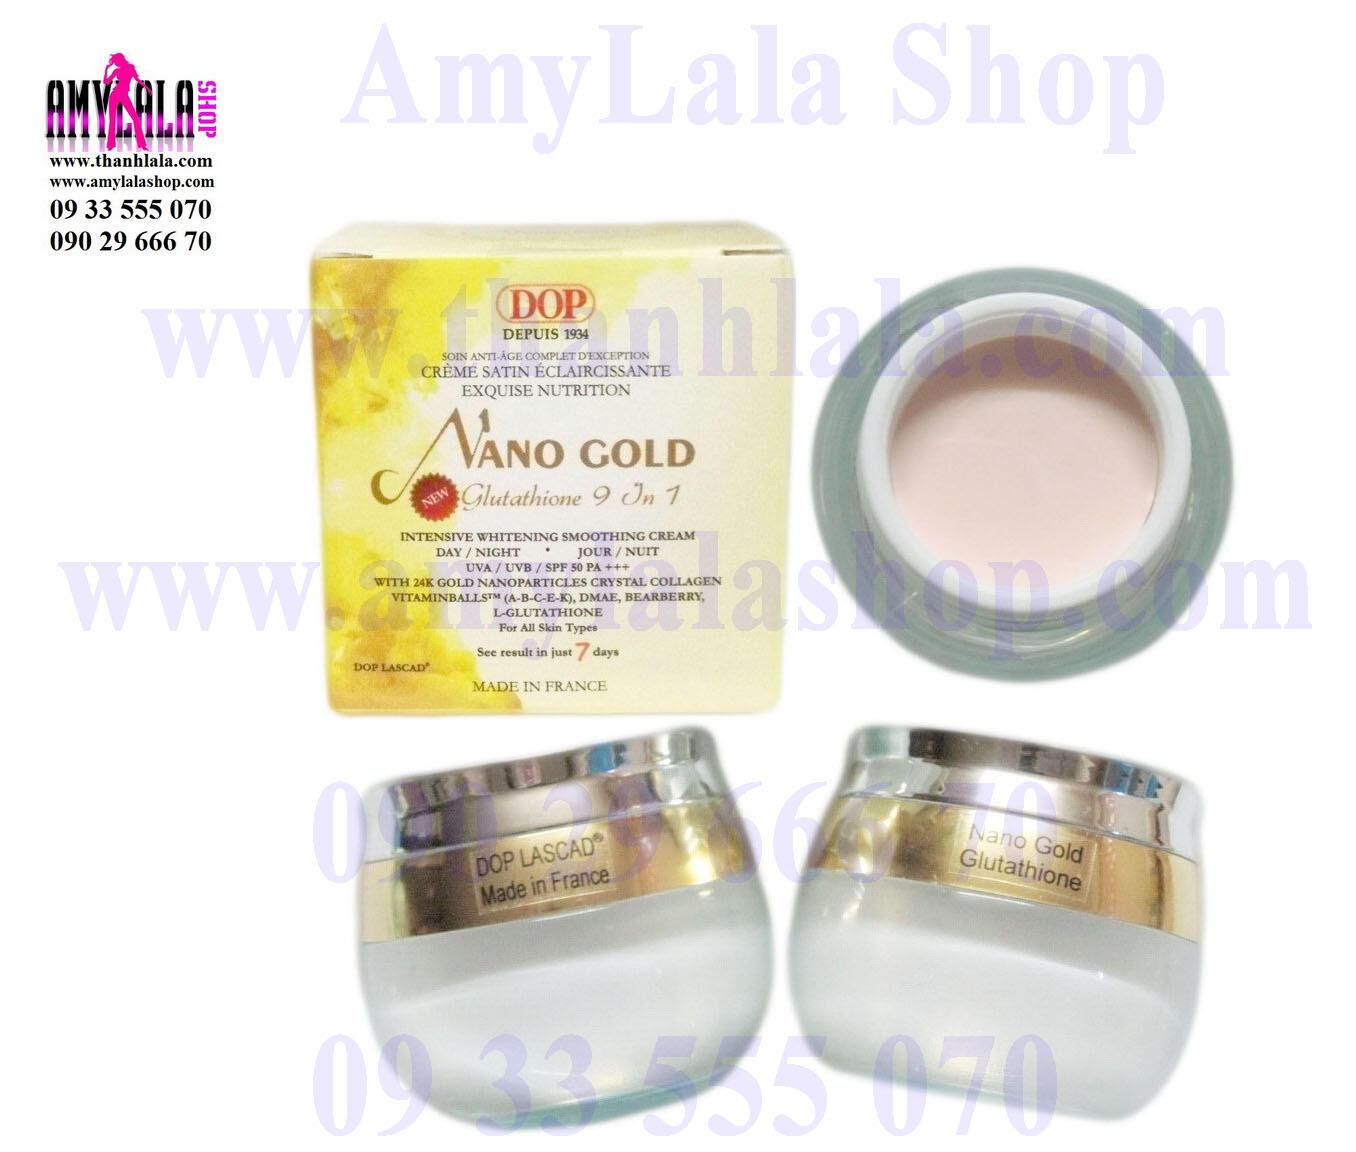 Kem mặt hạt vàng 24k Dop Lascad® Nano Gold Glutathione 9in1 (60g) siêu trắng - 0933555070-